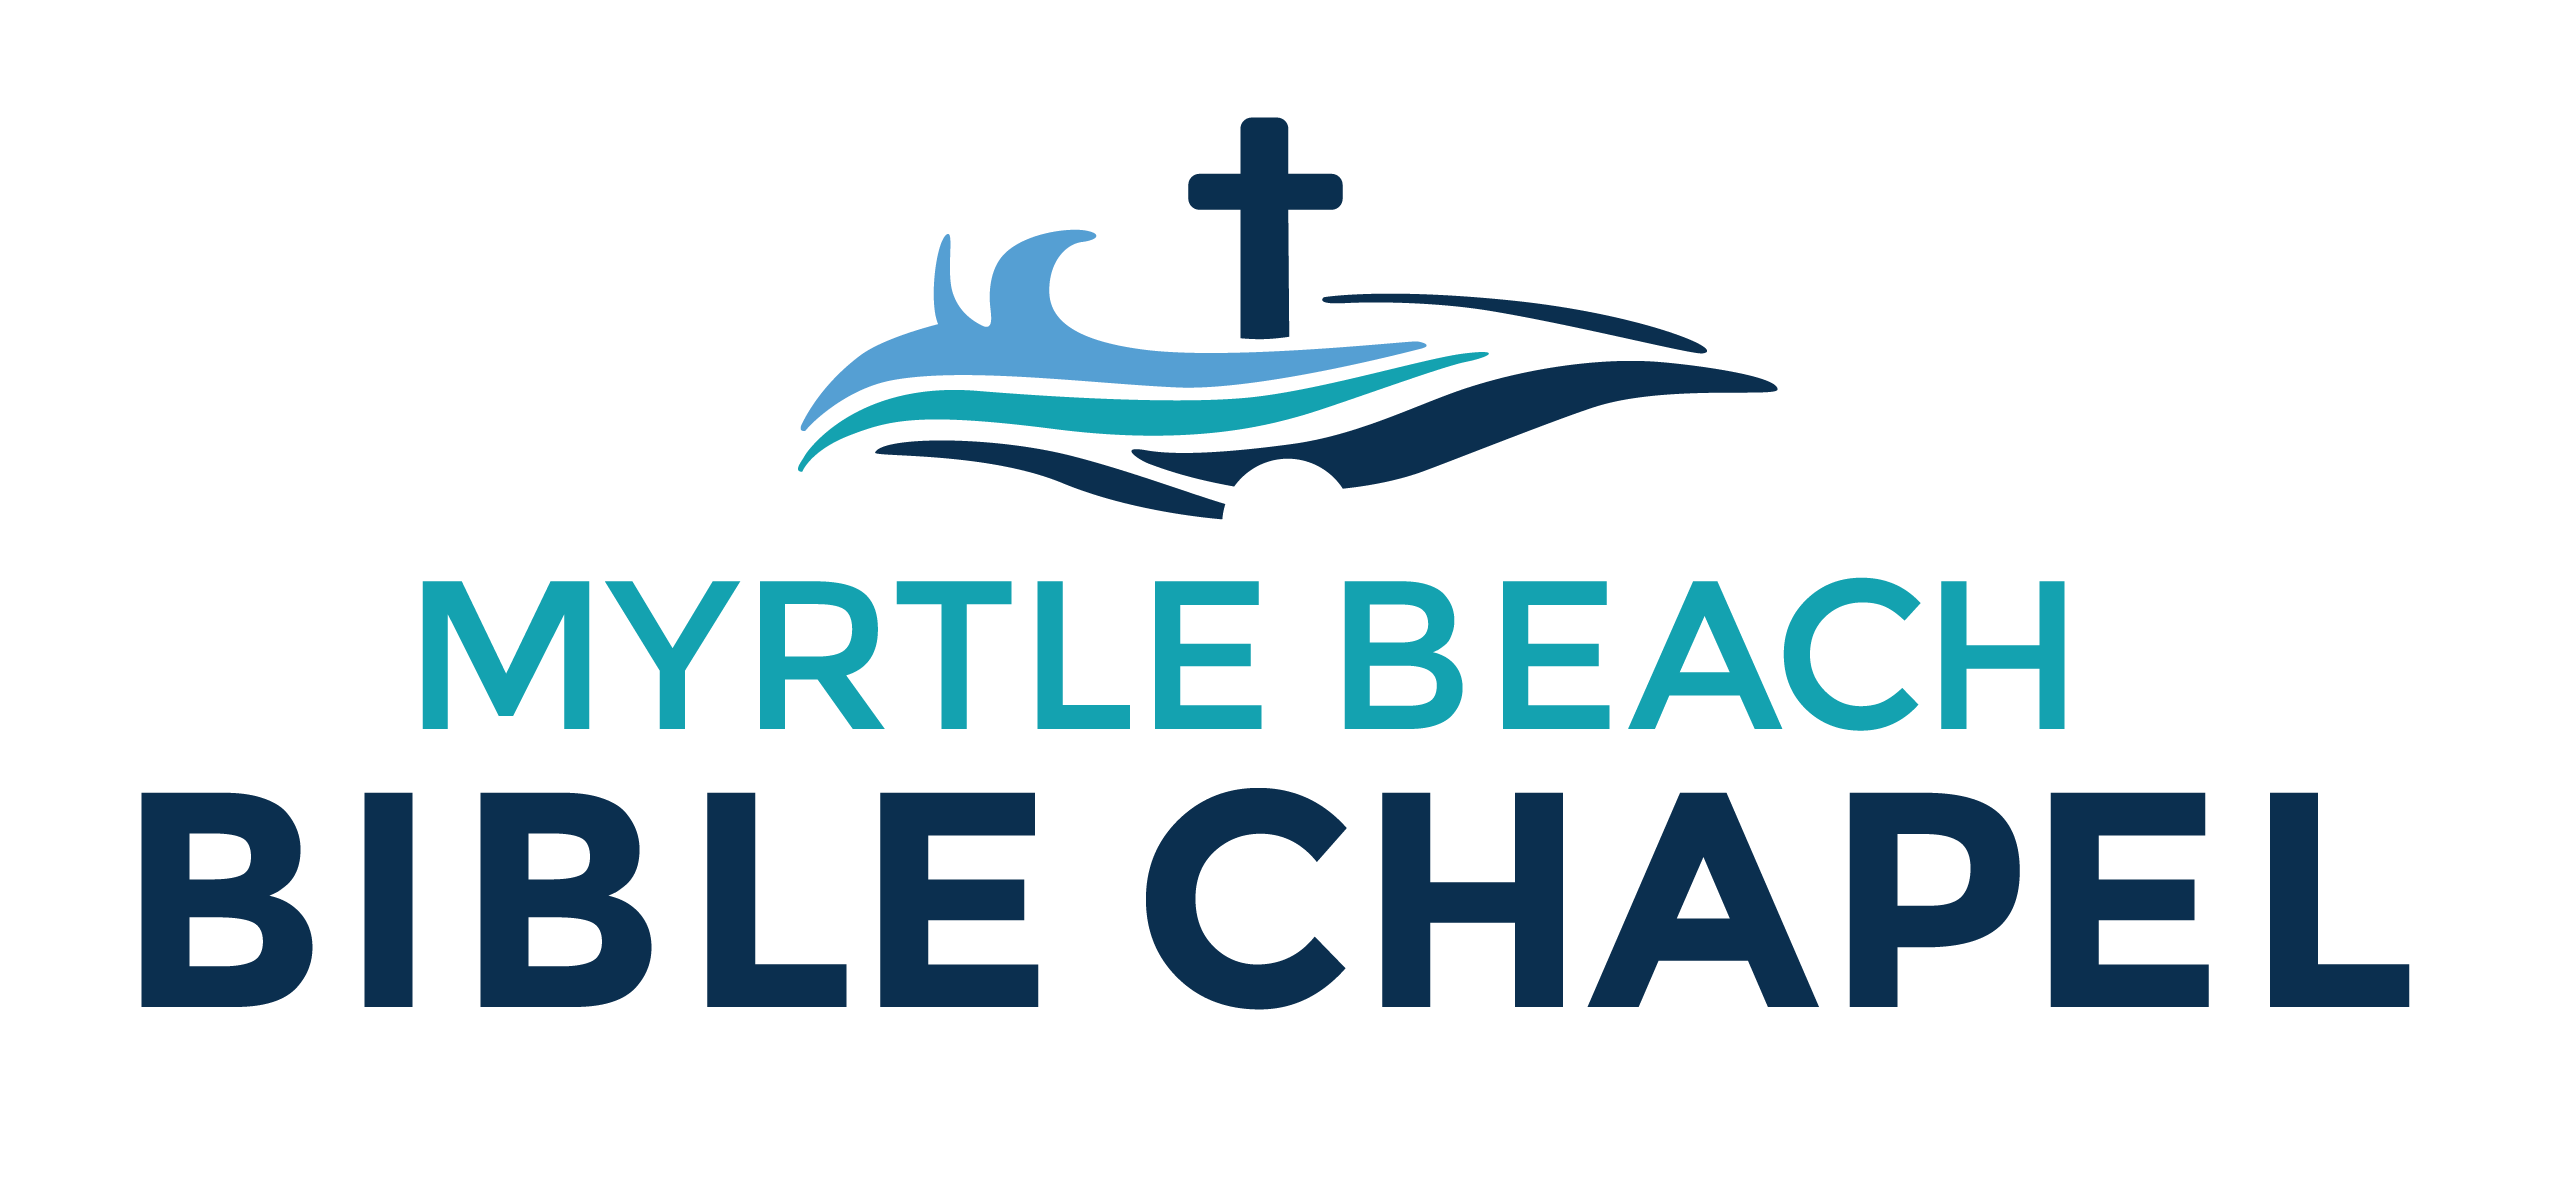 Myrtle Beach Bible Chapel